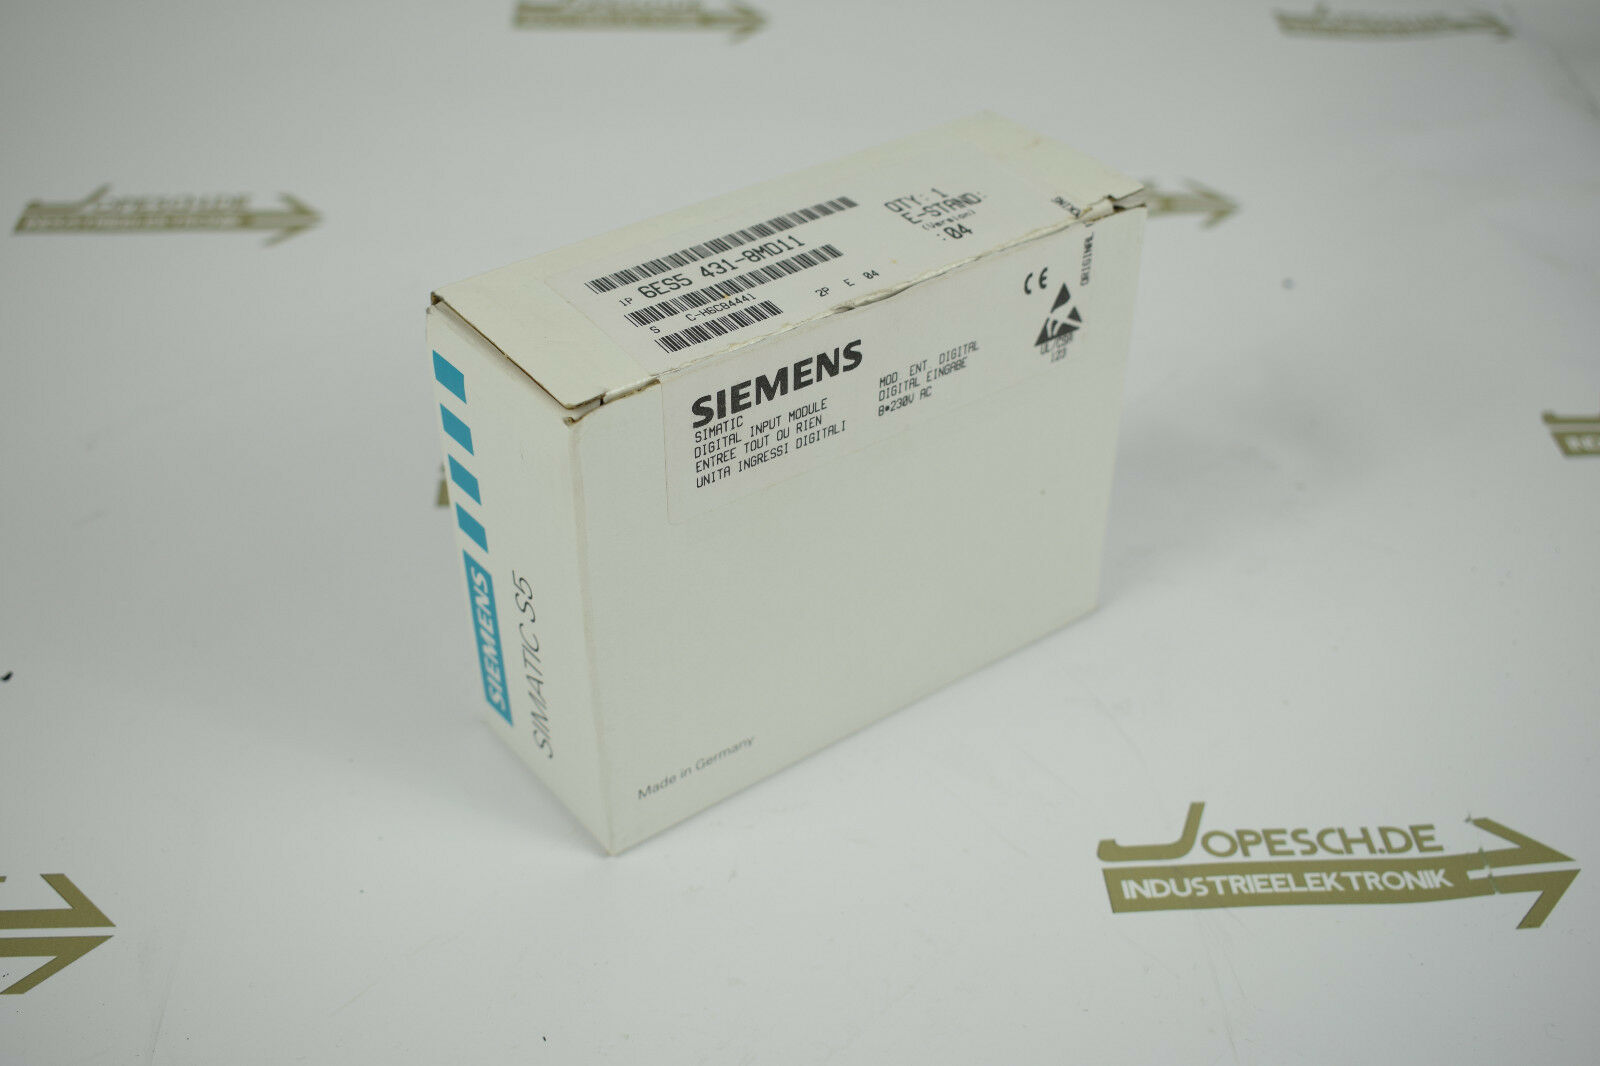 Siemens simatic S5 6ES5 431-8MD11 ( 6ES5431-8MD11 ) E4